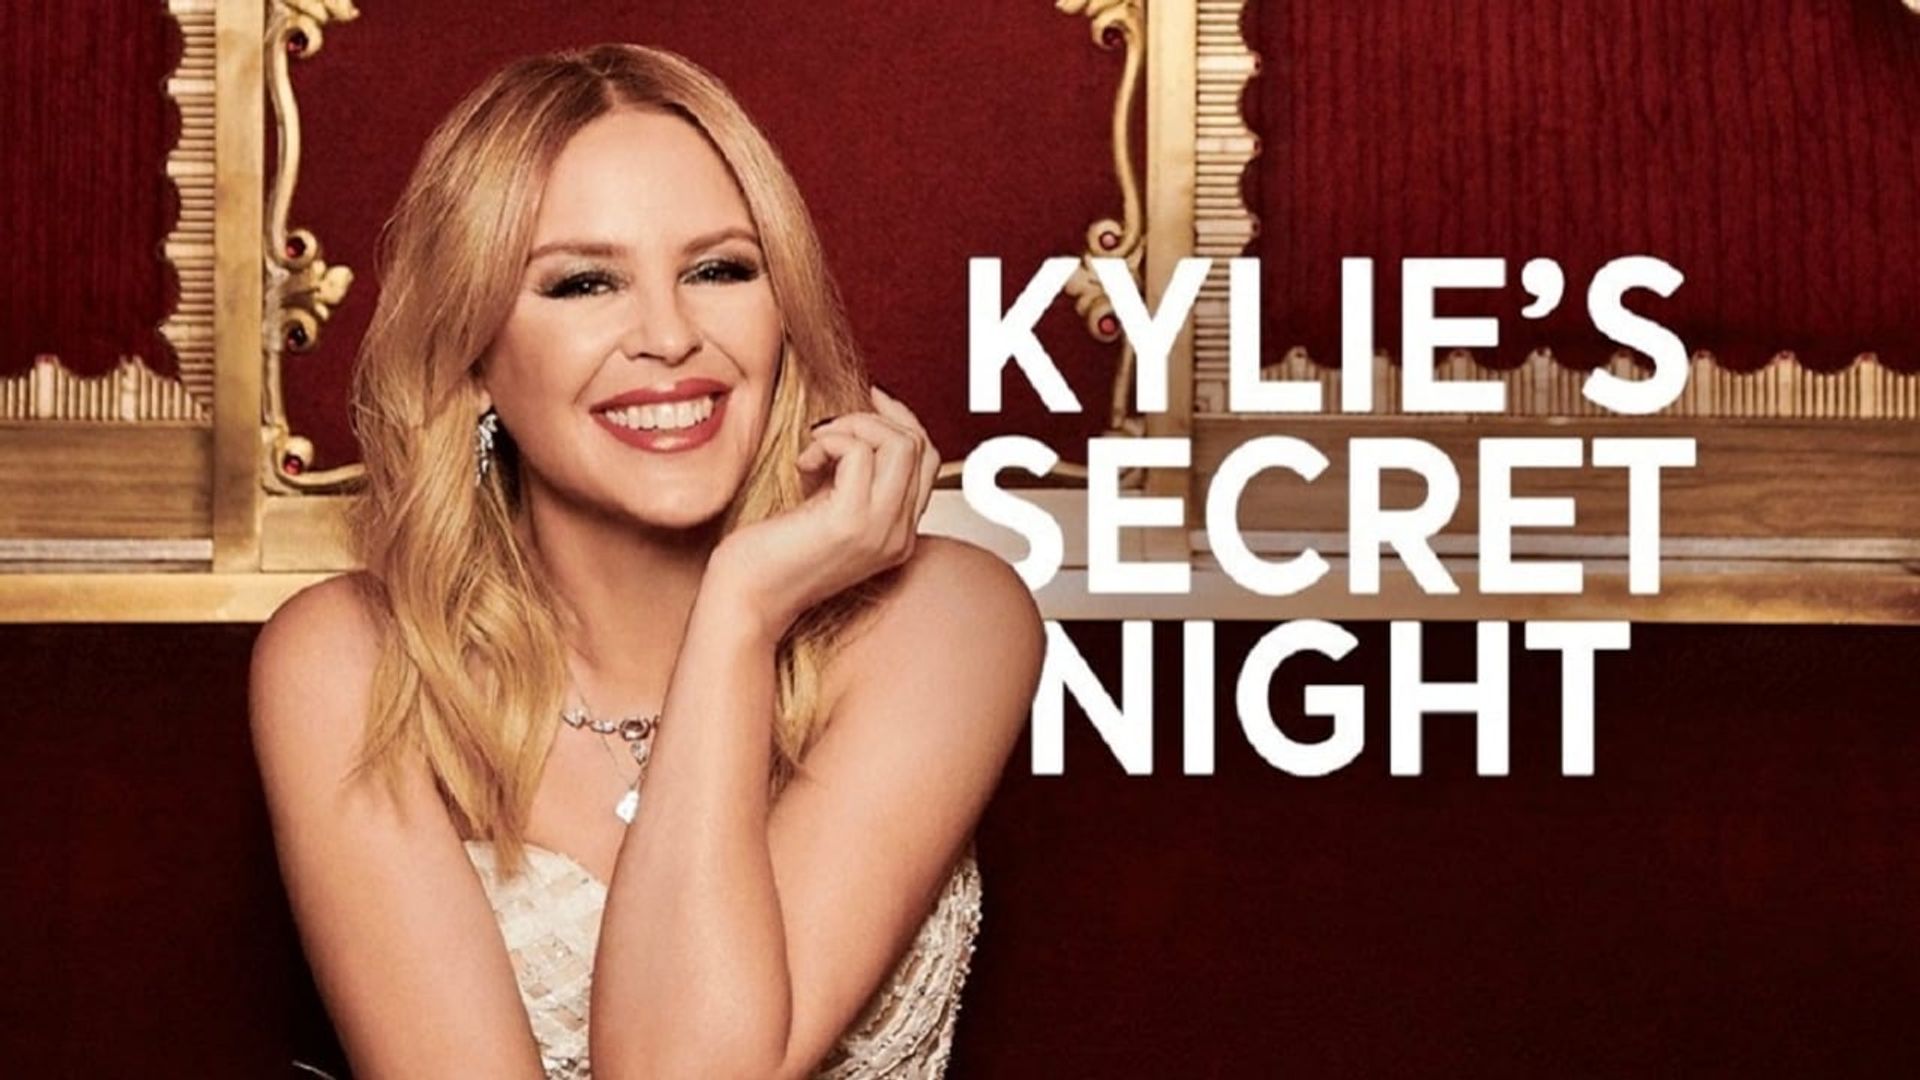 Kylie's Secret Night background